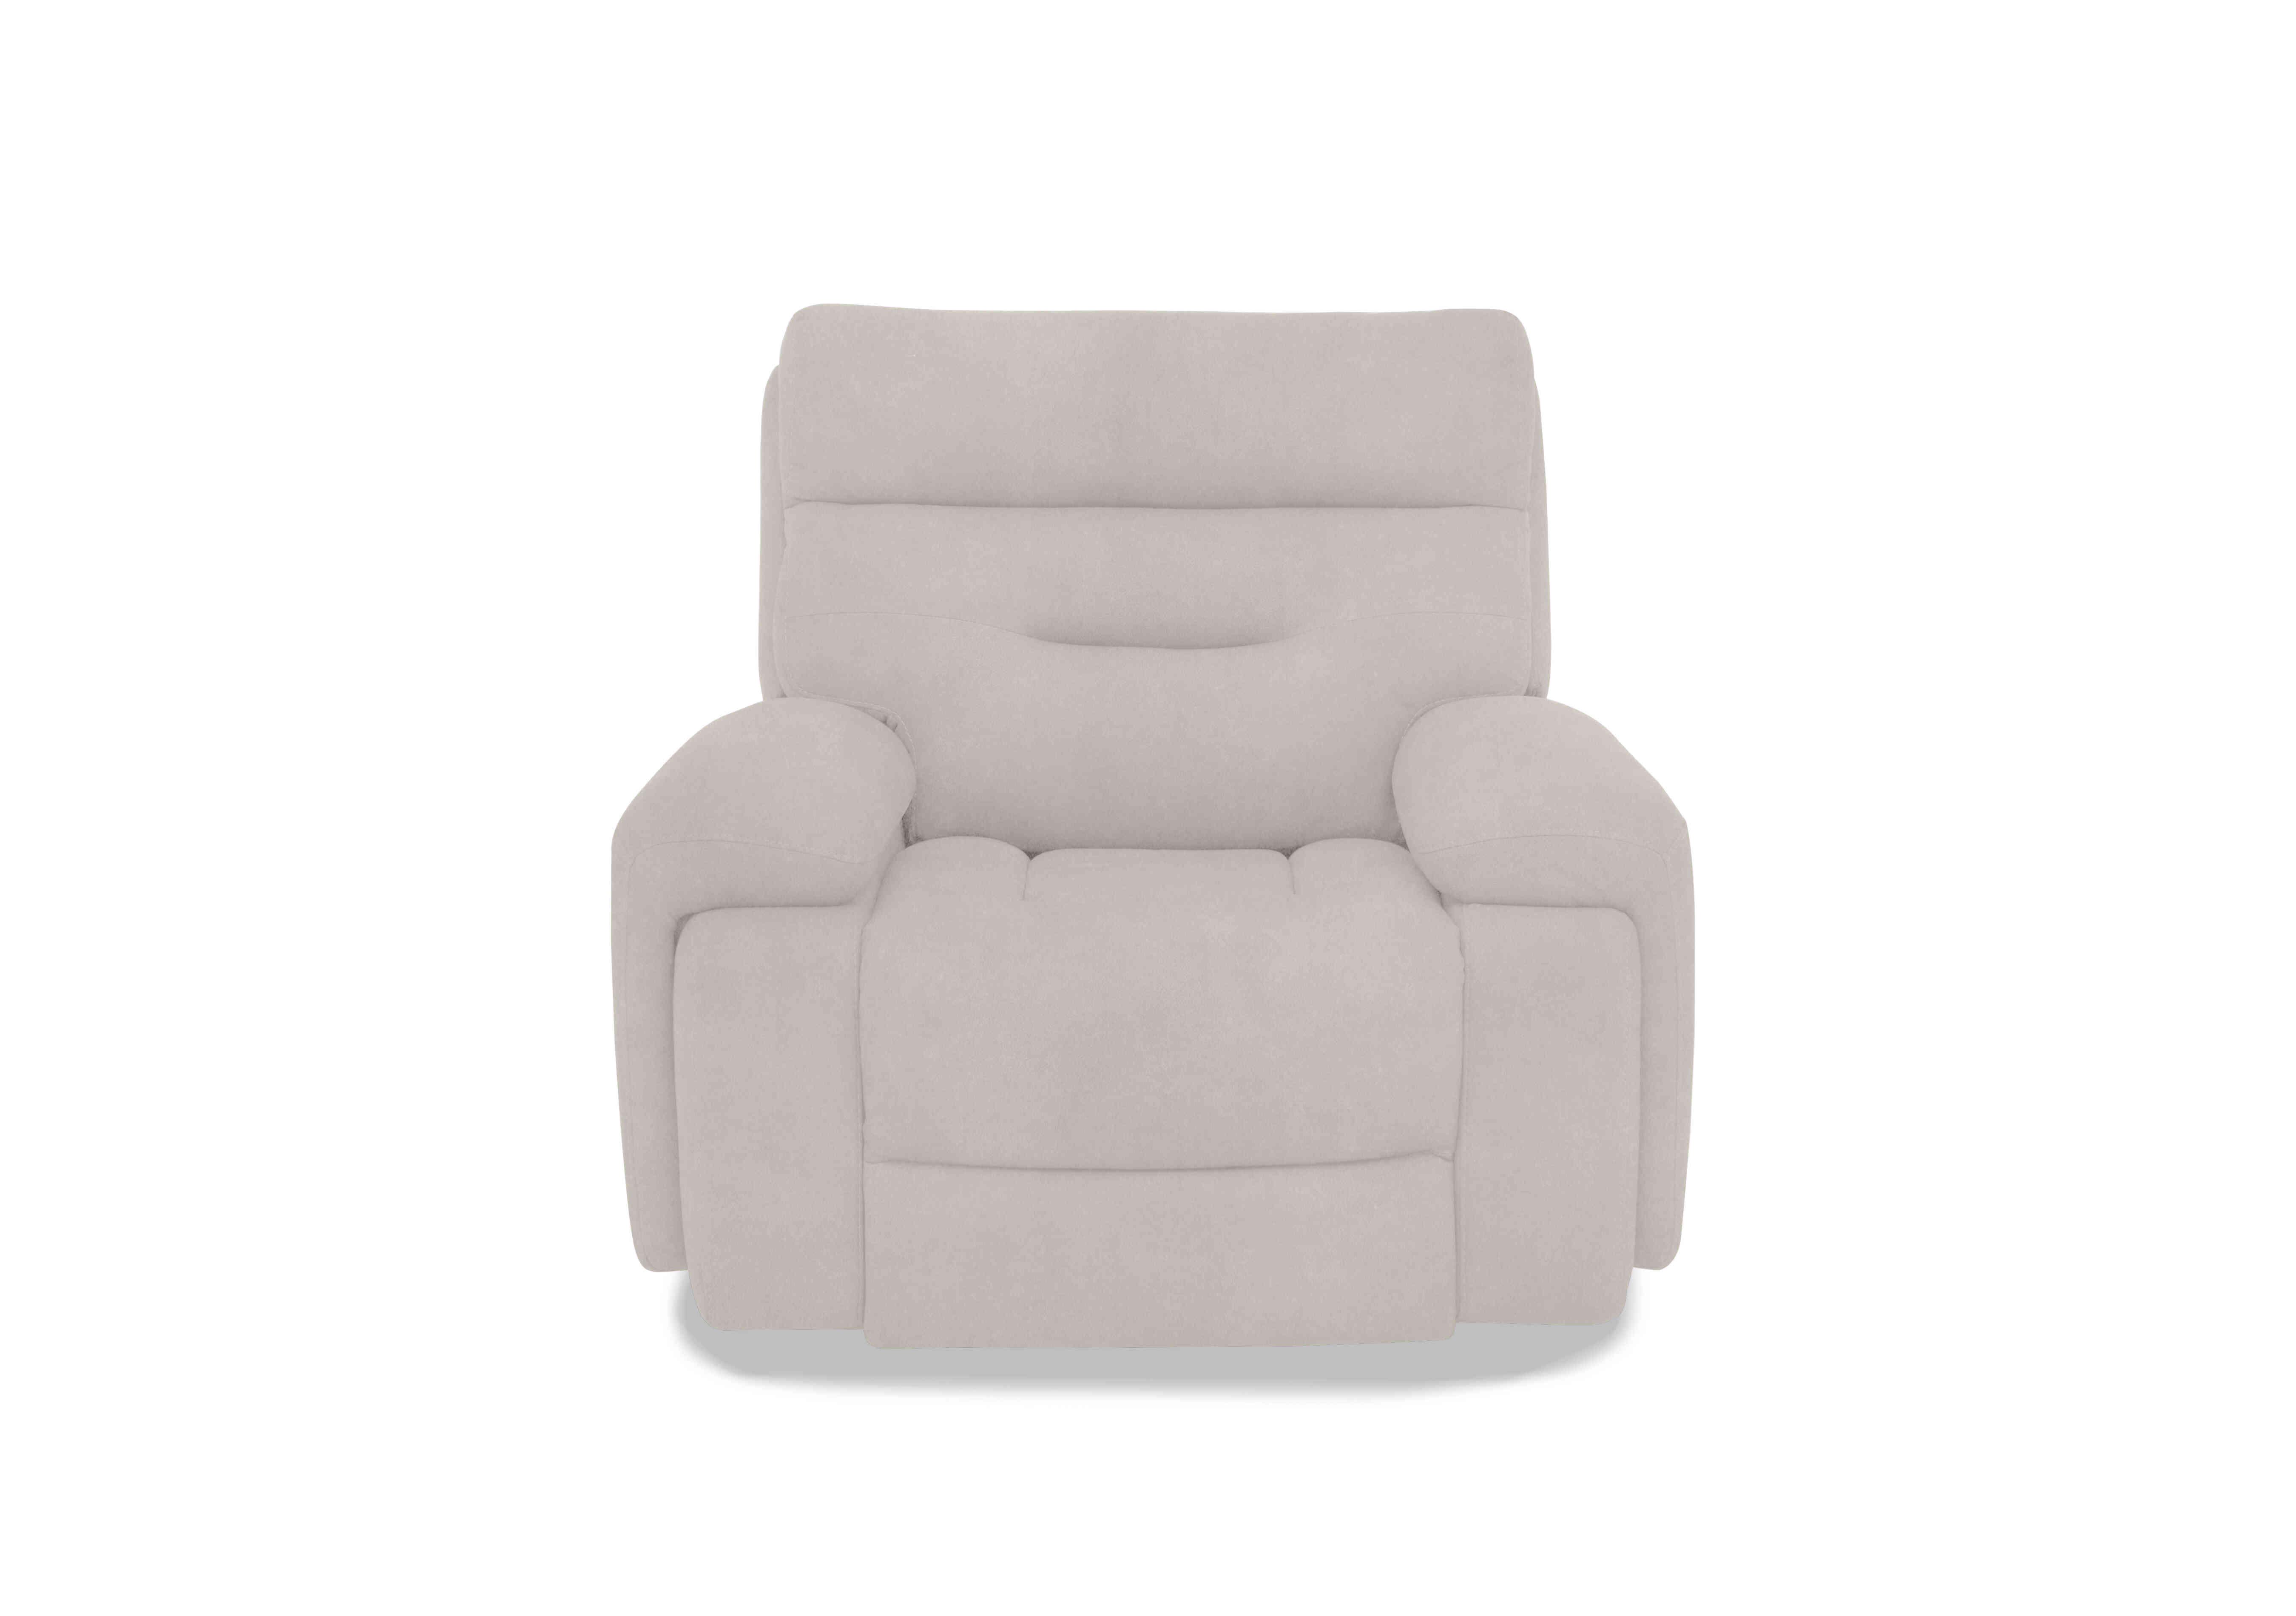 Cinemax Media Fabric Power Recliner Chair with Power Headrest in Vv-0307 Velvet White on Furniture Village